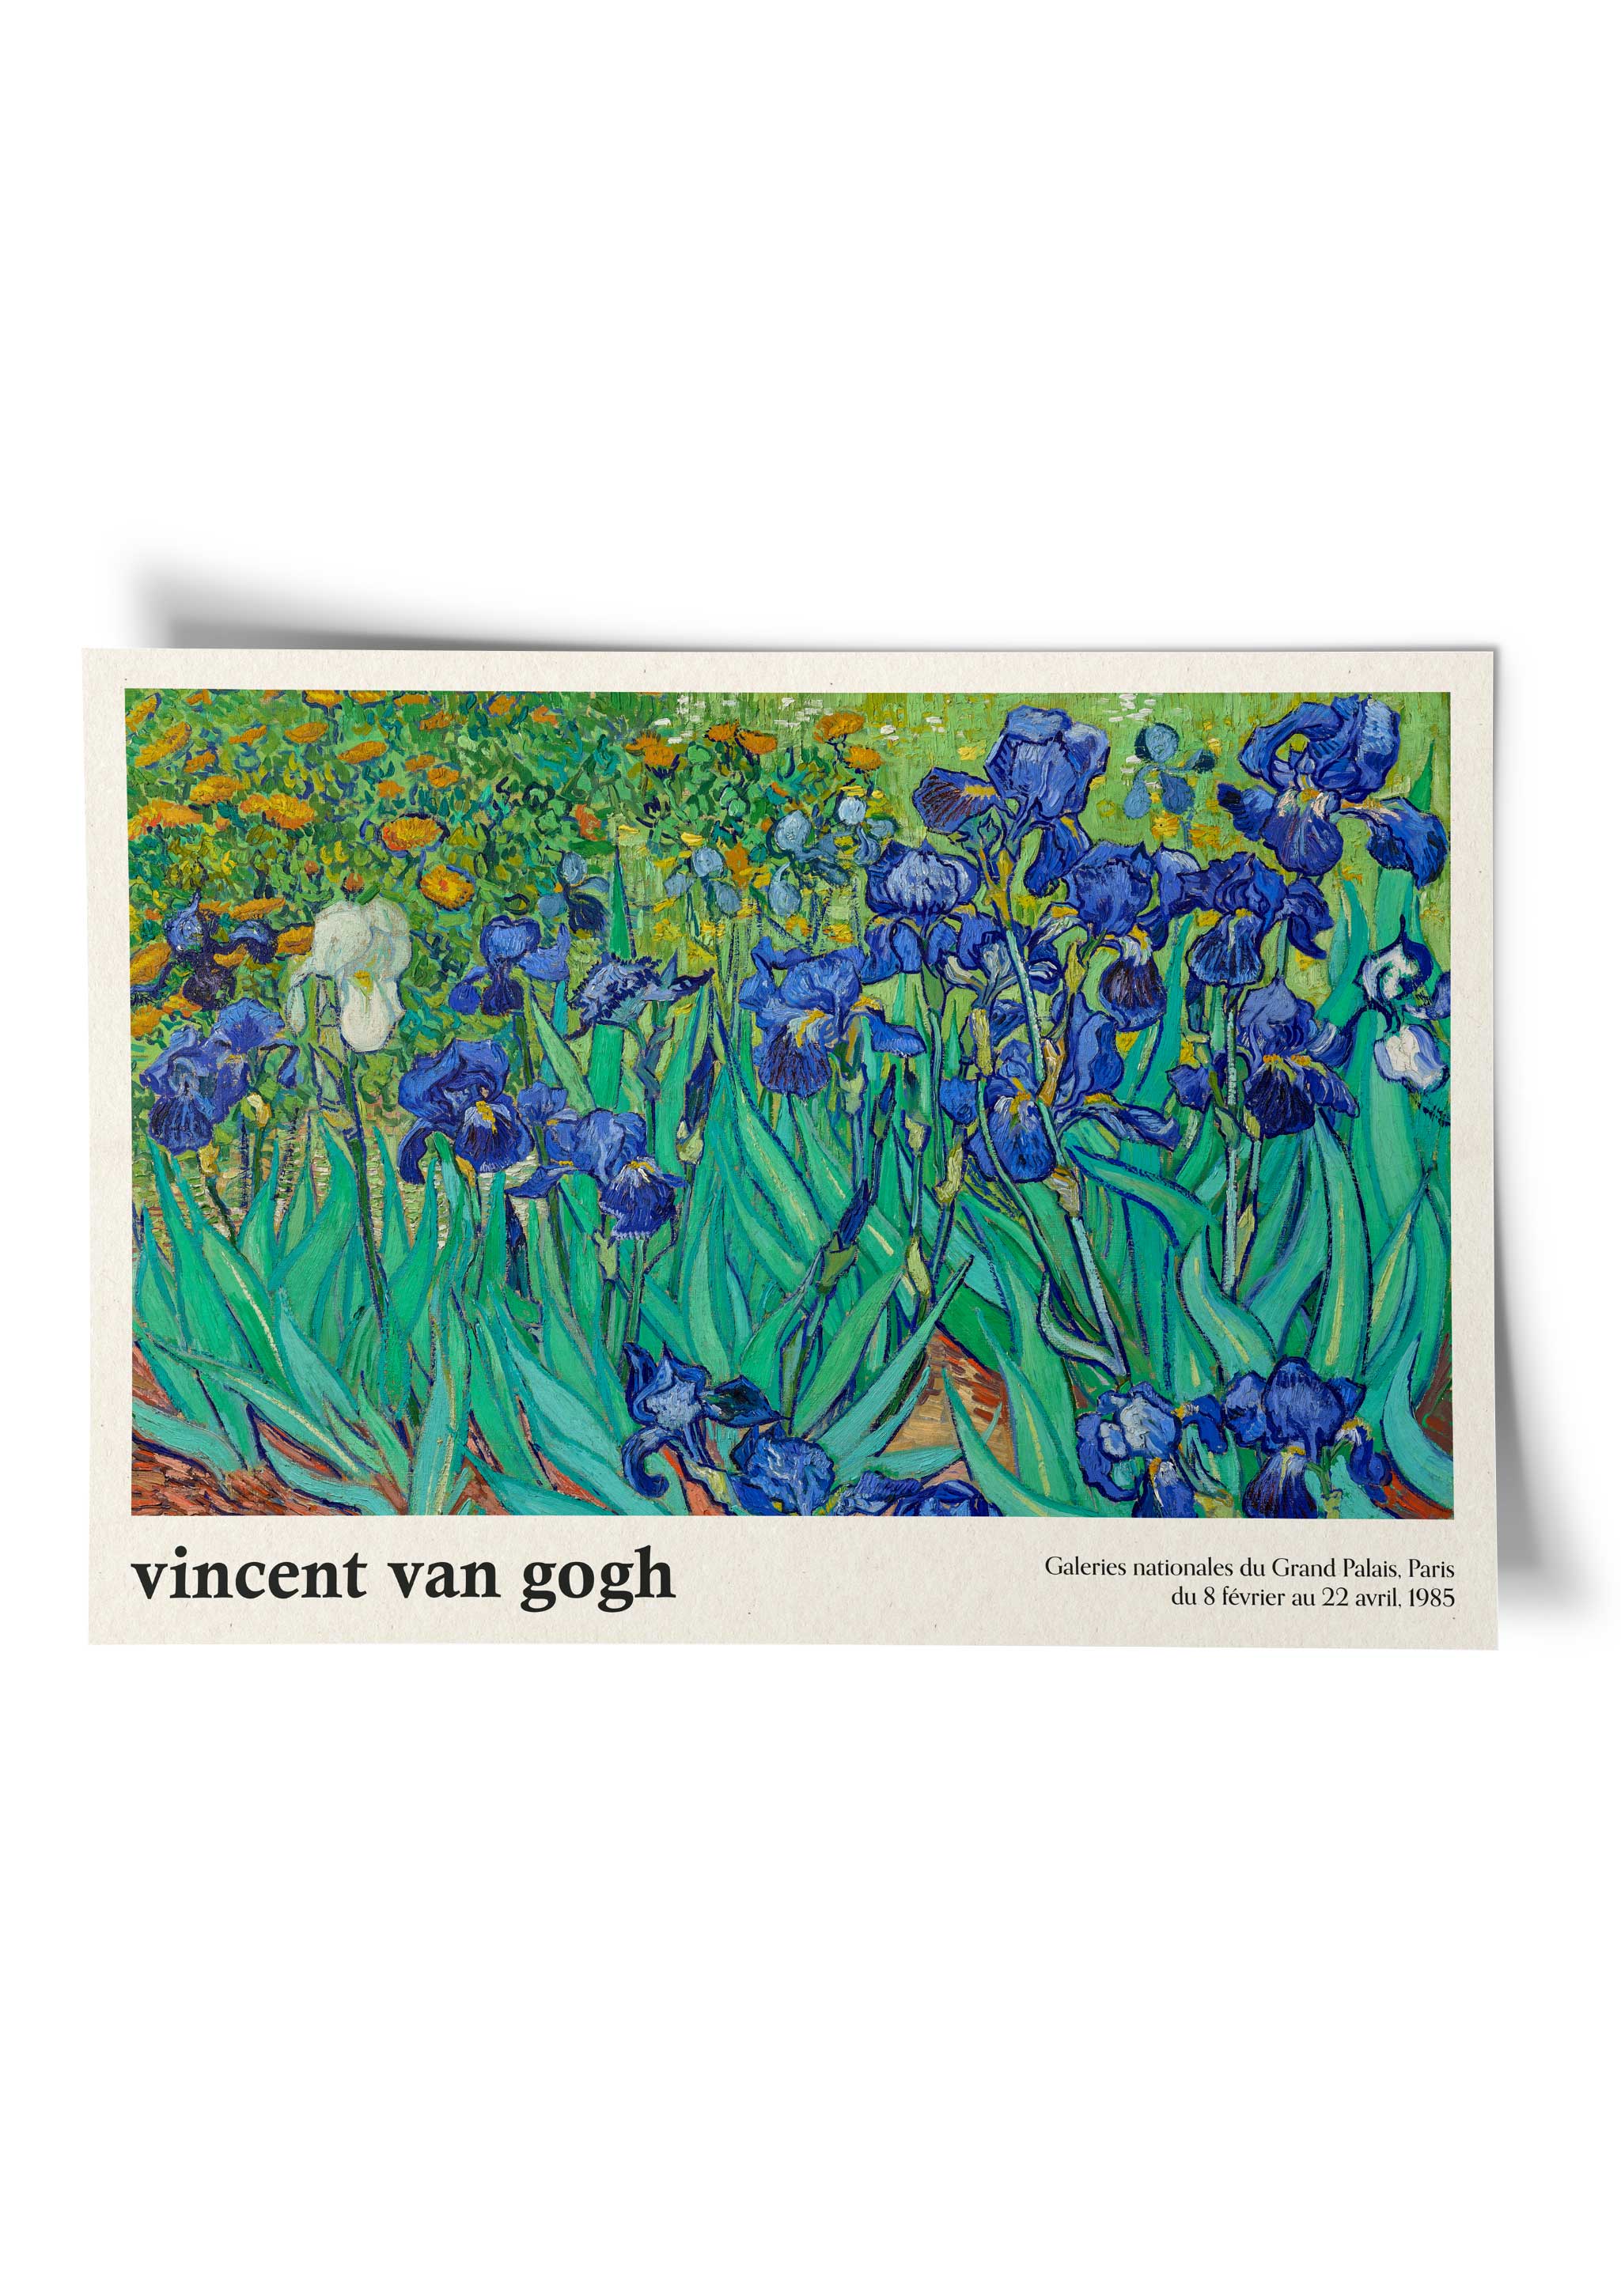 Vincent van Gogh - Irises Exhibition Poster